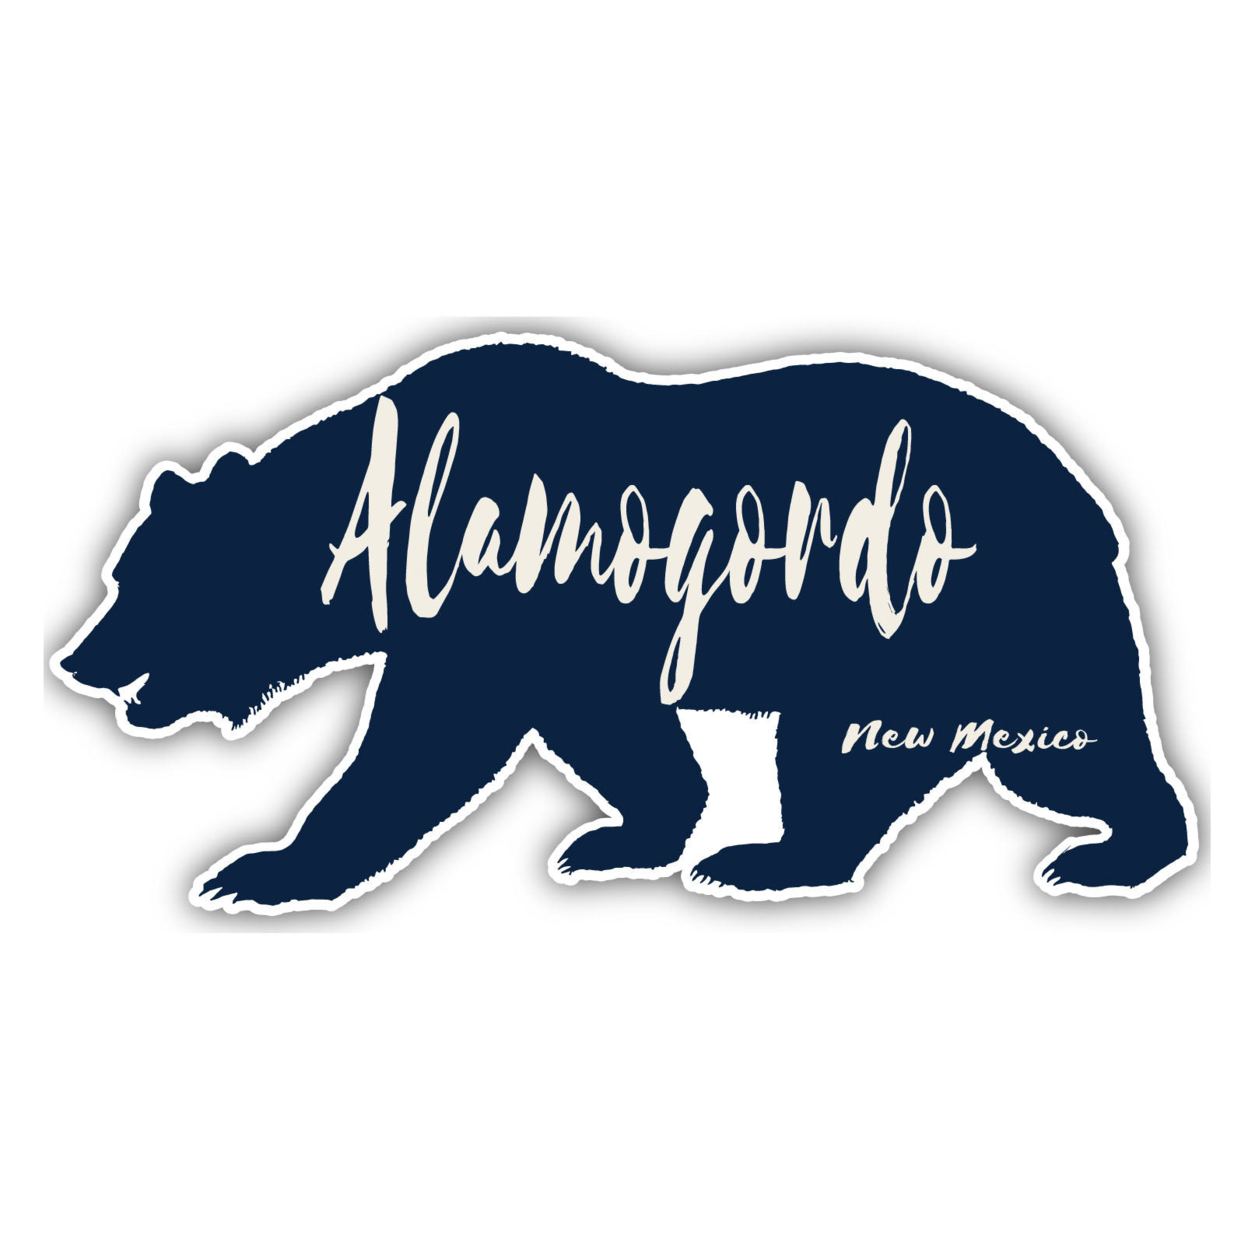 Alamogordo New Mexico Souvenir Decorative Stickers (Choose Theme And Size) - Single Unit, 10-Inch, Bear